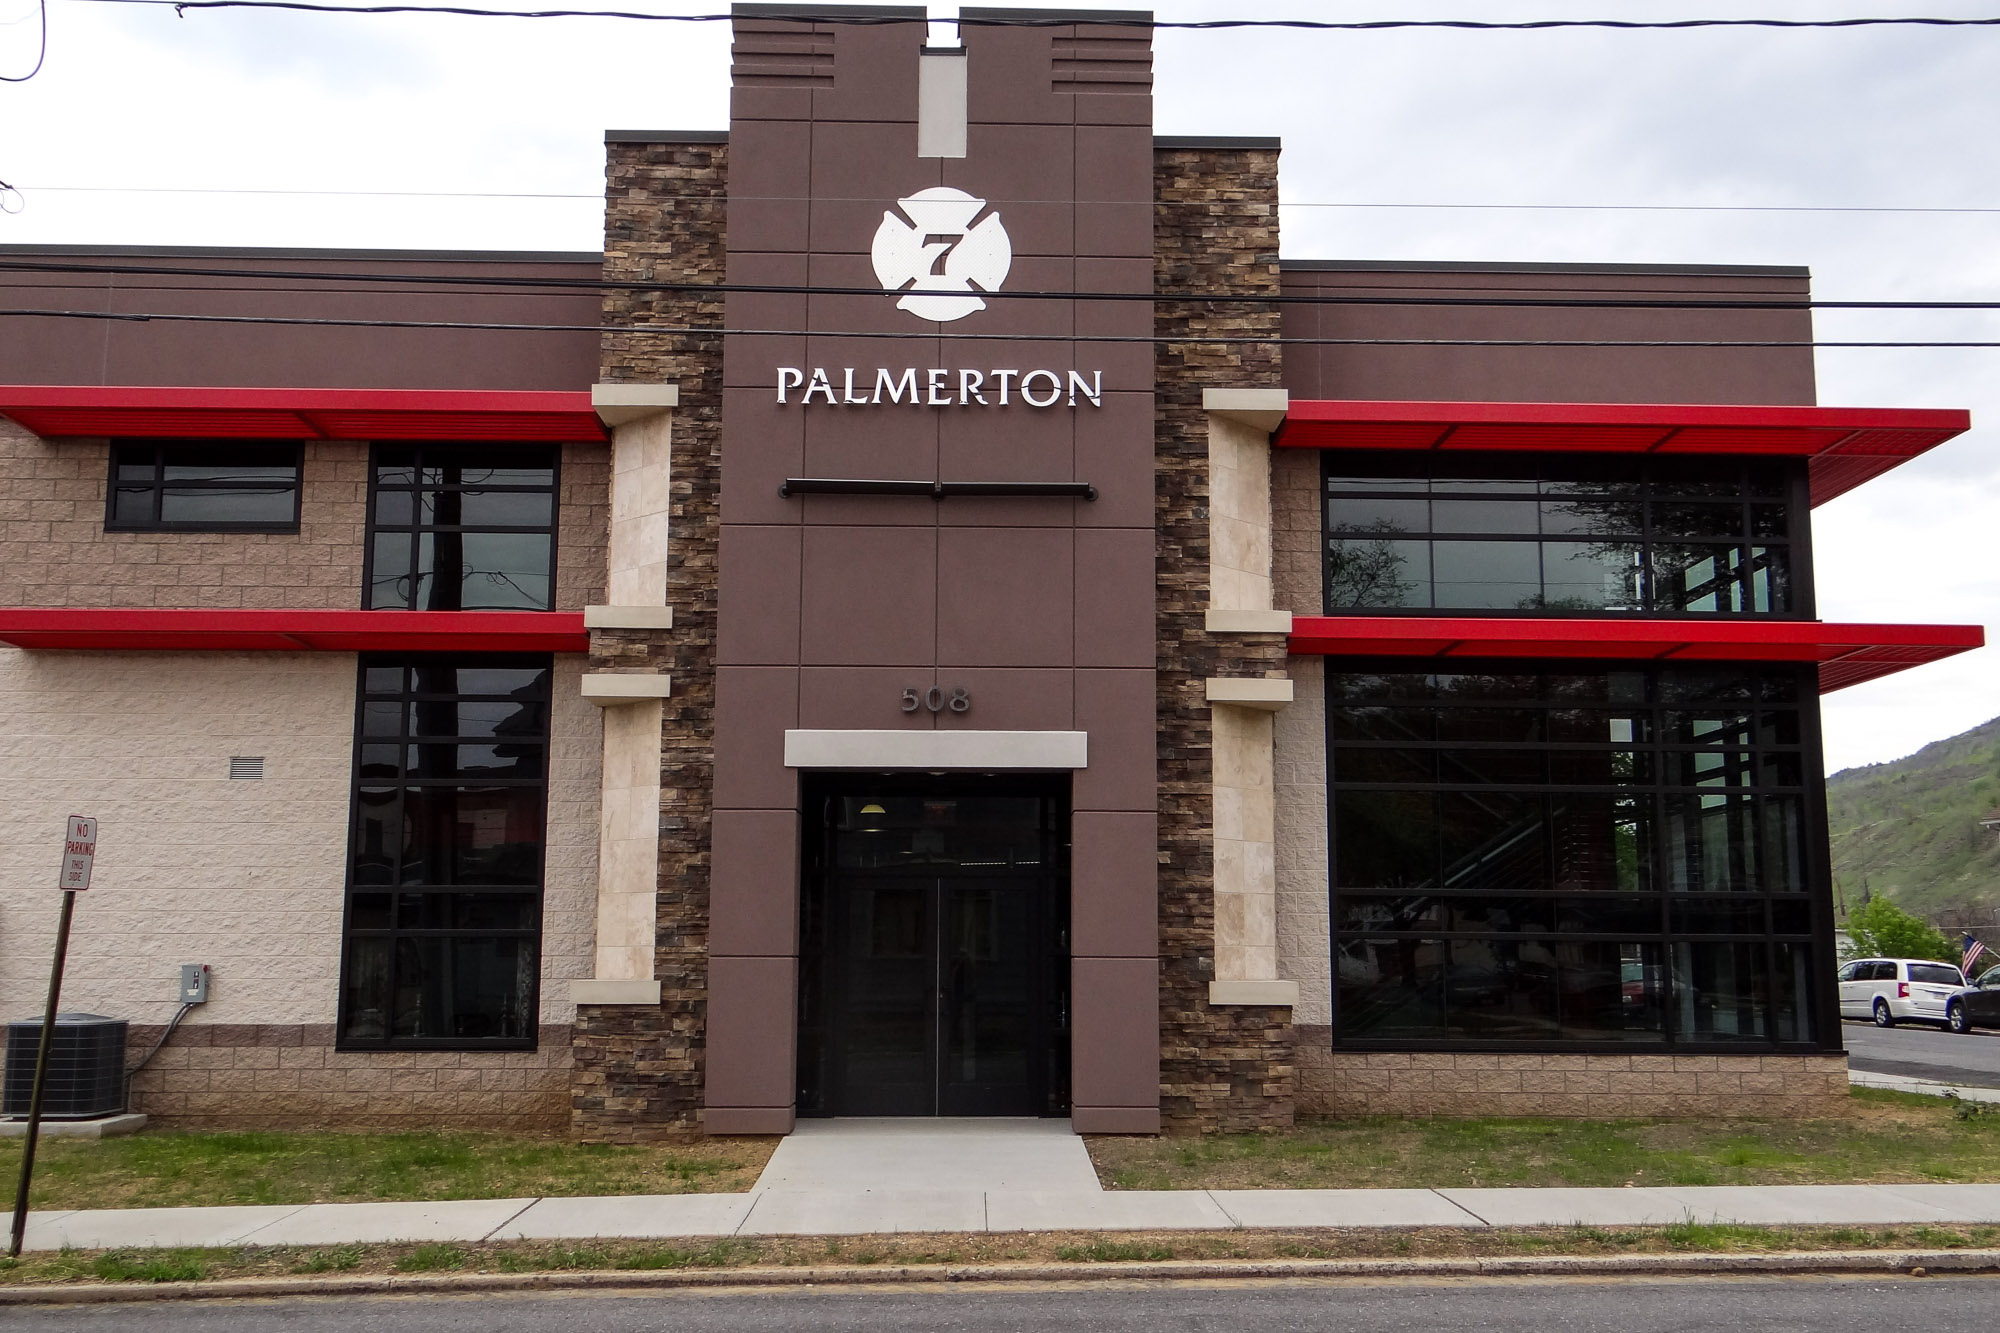 Borough of Palmerton Fire Station